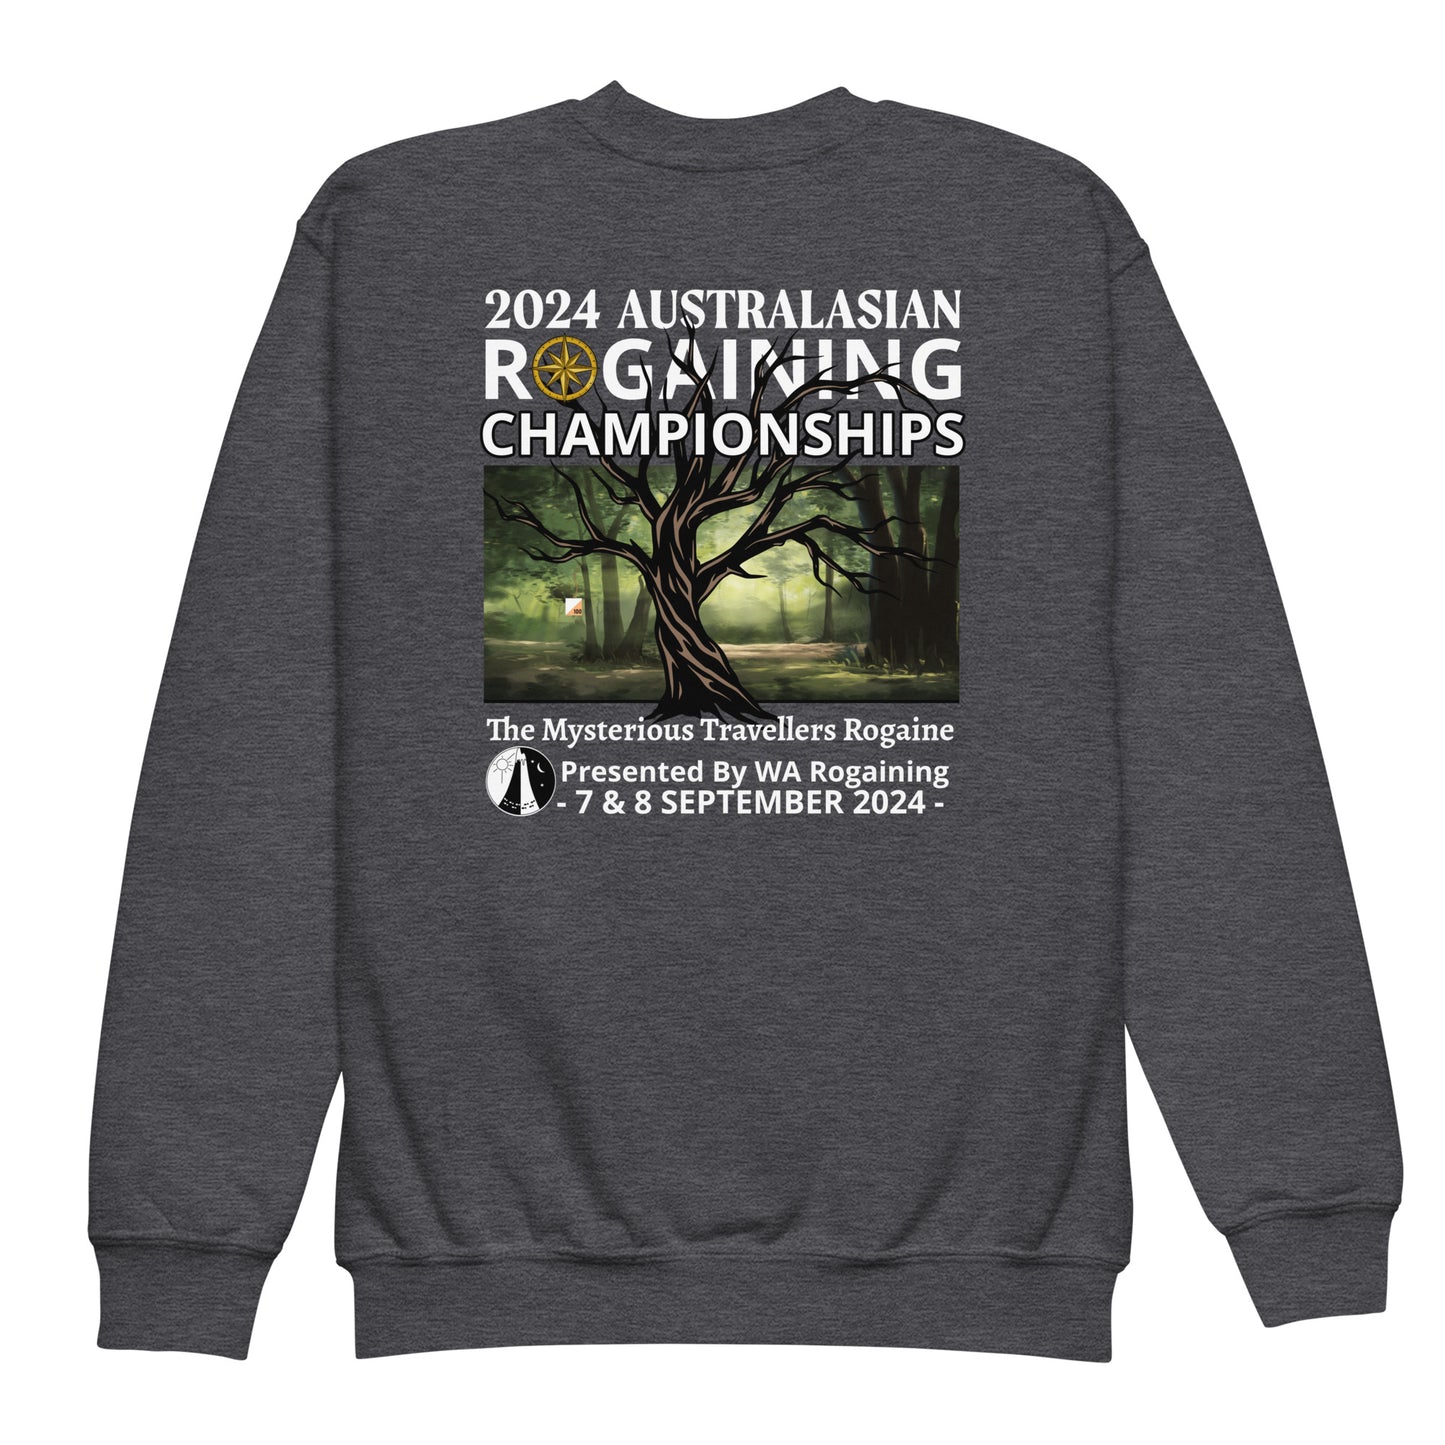 2024 Australasian Rogaining Championship - Graphic - Unisex Youth Crew Neck